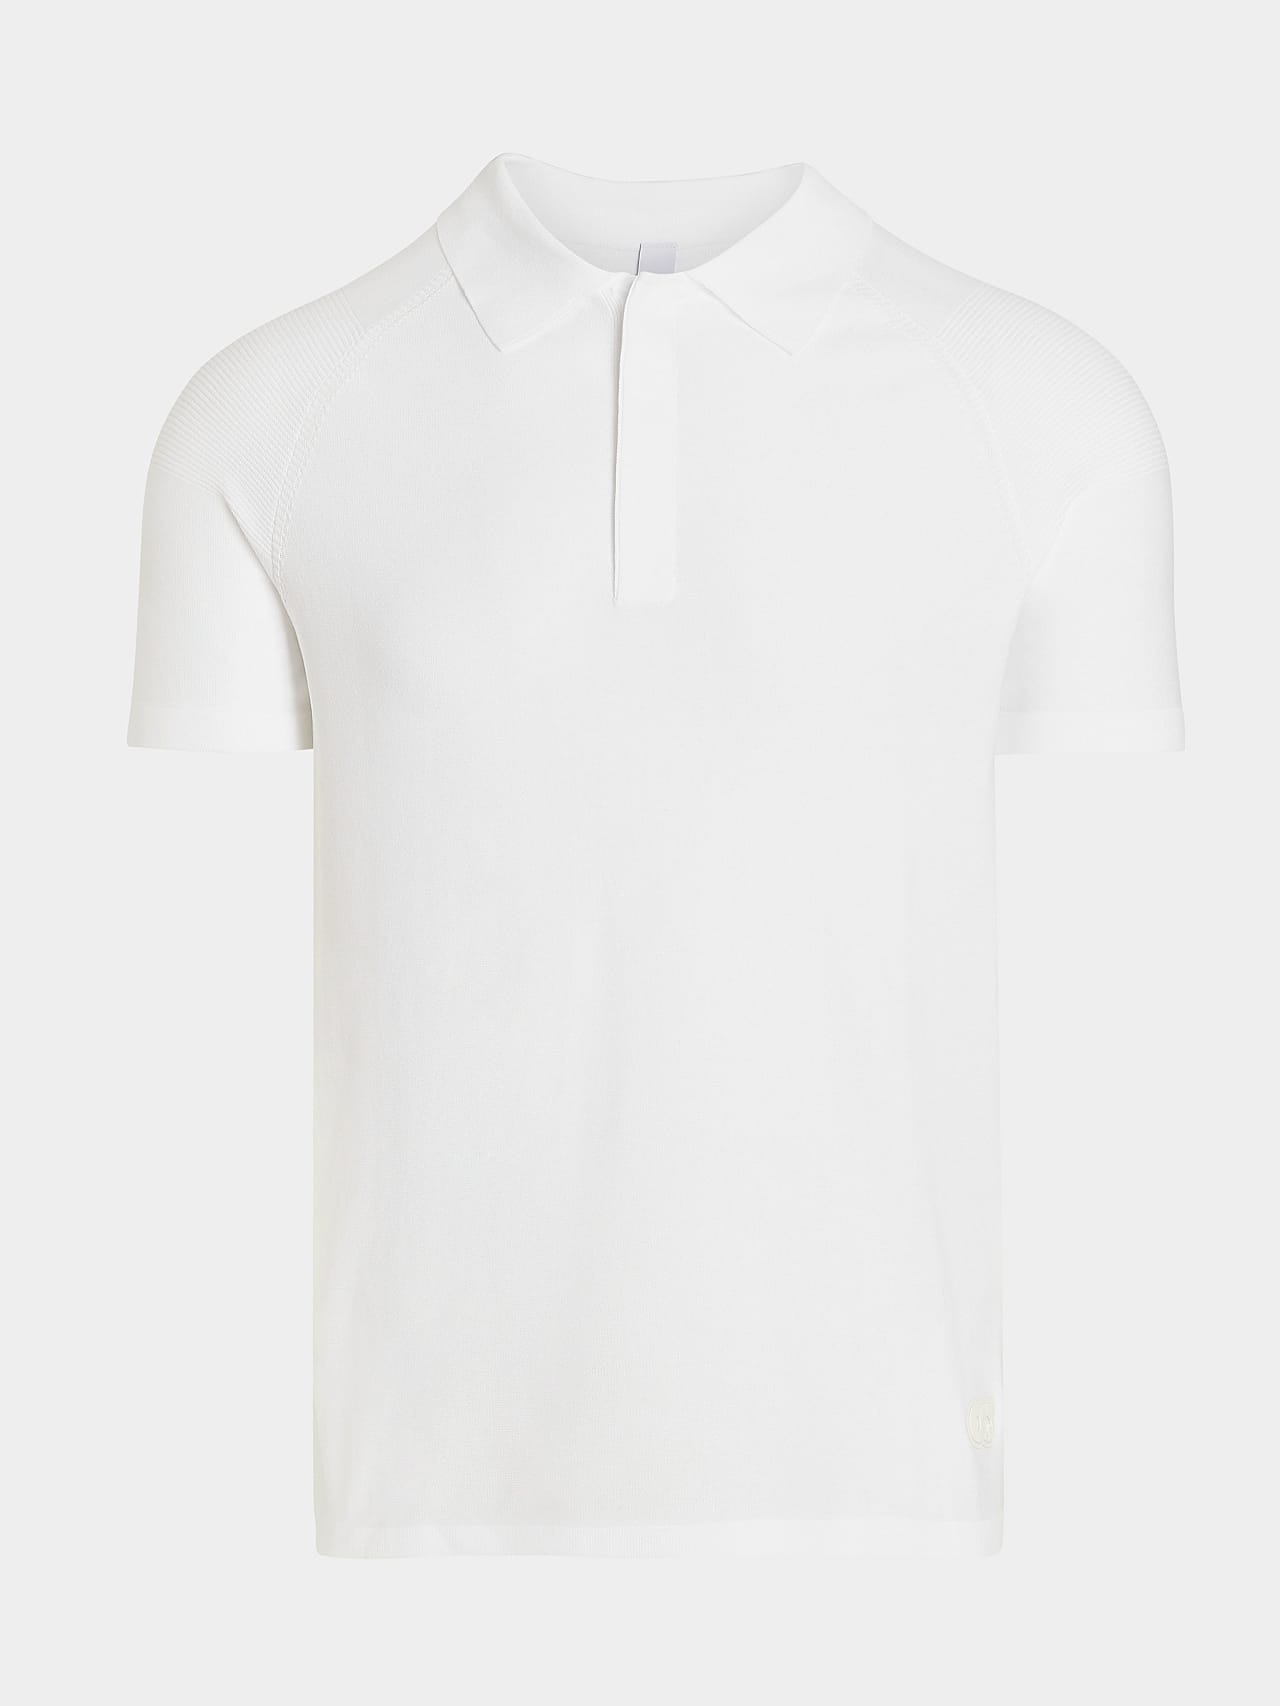 Performance Knit Polo-Shirt | FENZI V1.Y5.01 | White | AlphaTauri